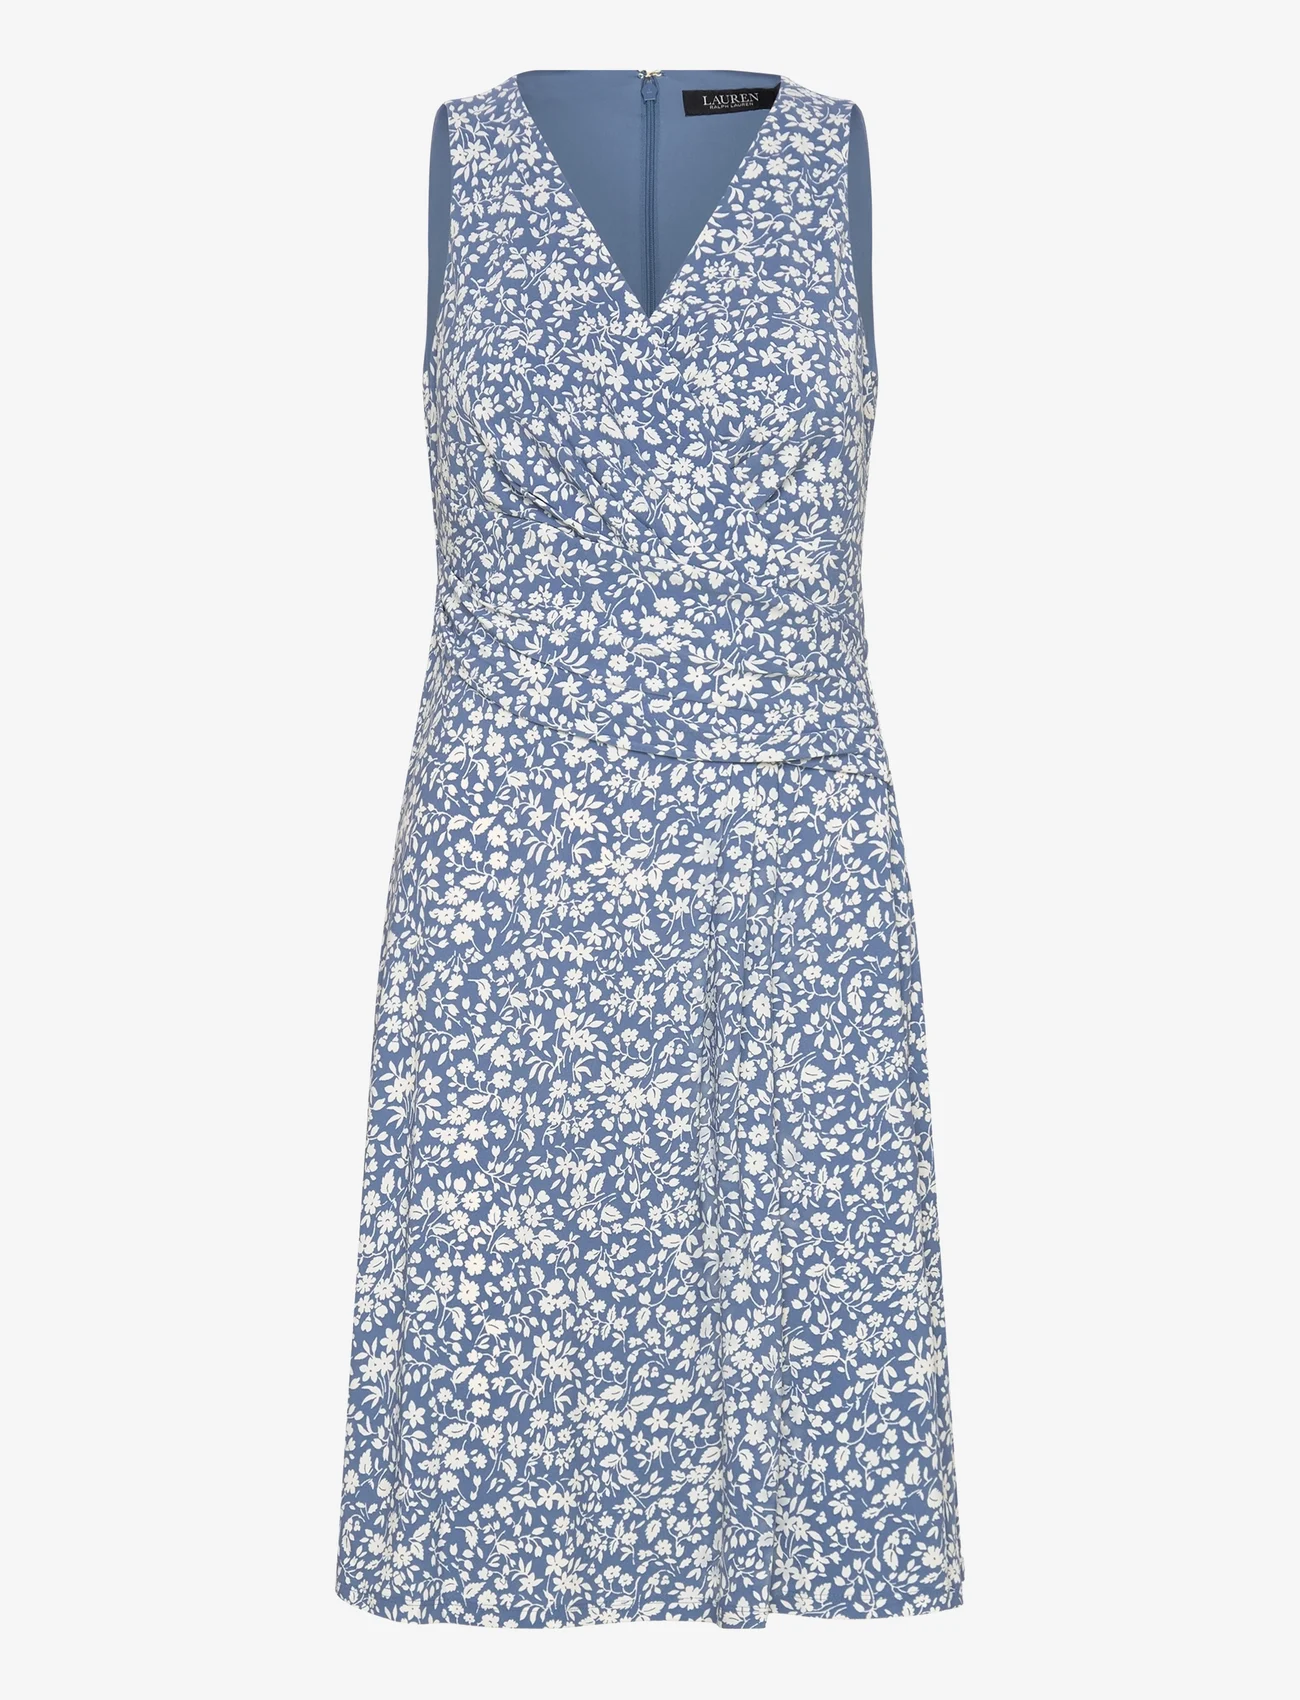 Lauren Ralph Lauren - Floral Surplice Jersey Sleeveless Dress - sukienki letnie - blue/cream - 0